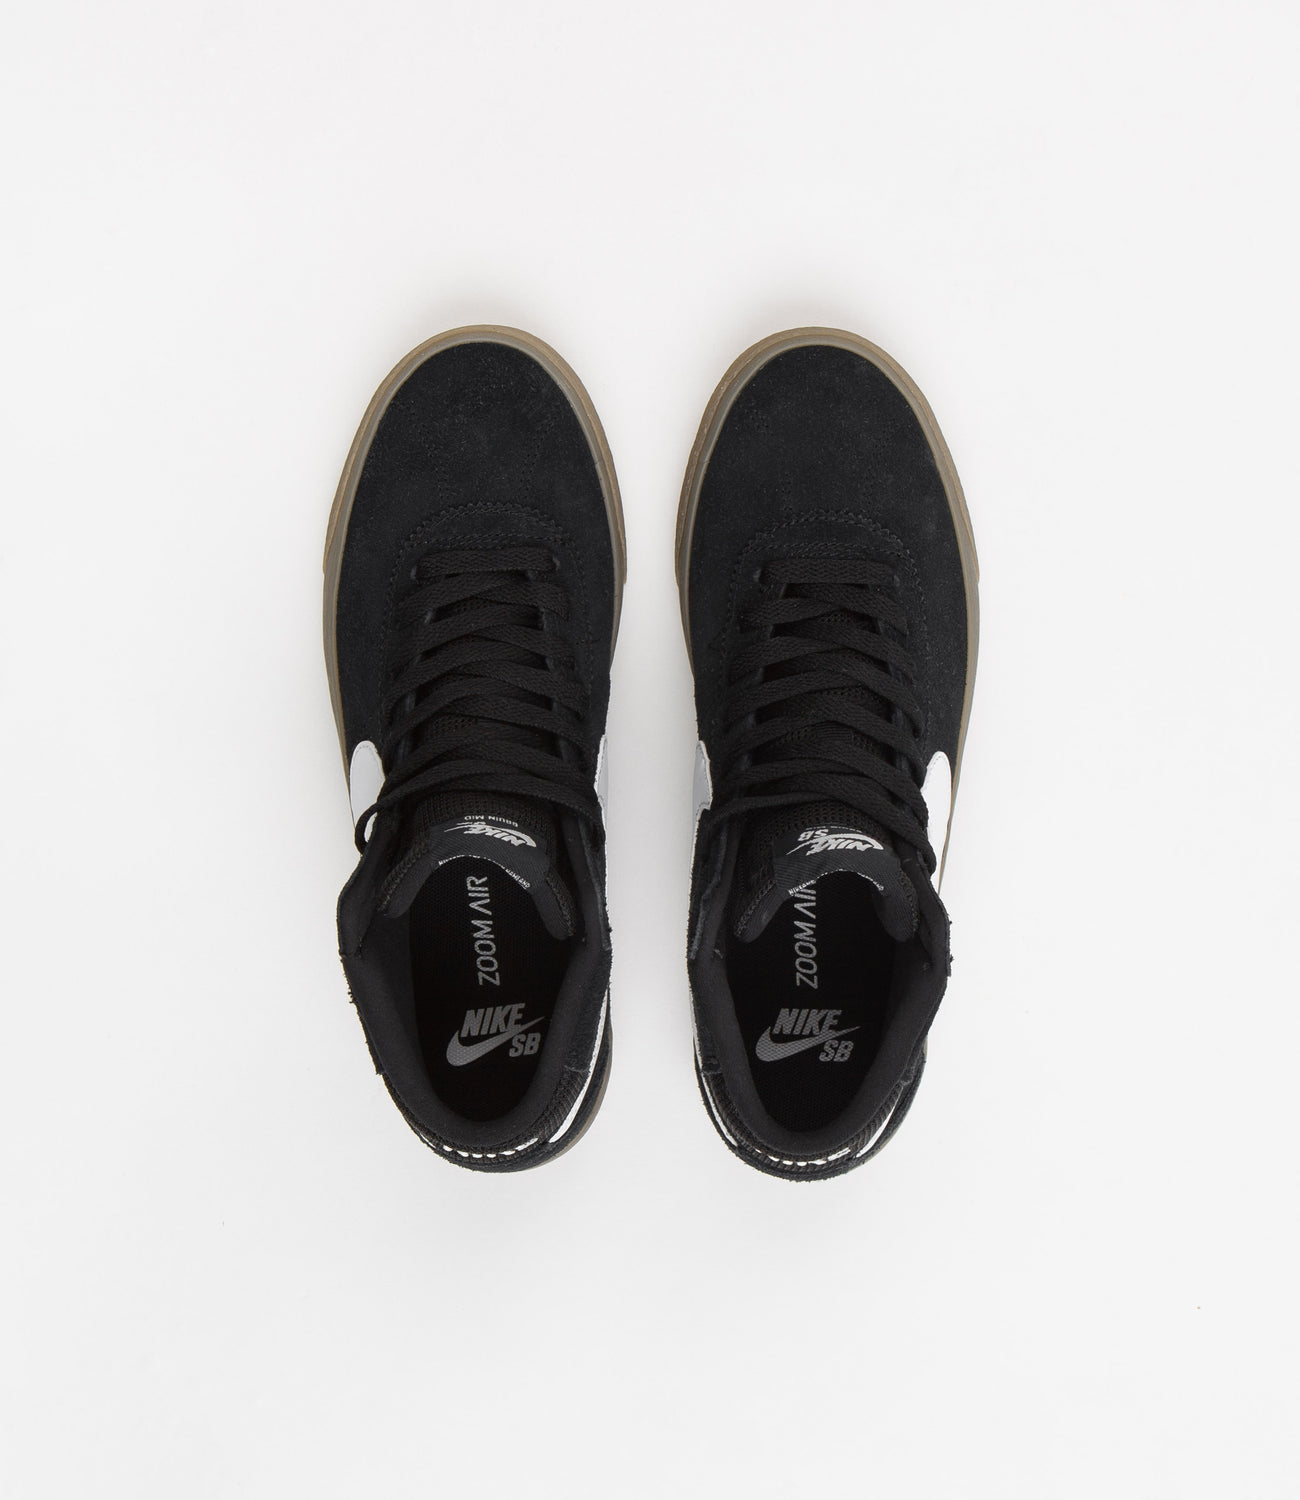 Nike SB Womens Bruin High Shoes - Black / White - Gum Light Brown |